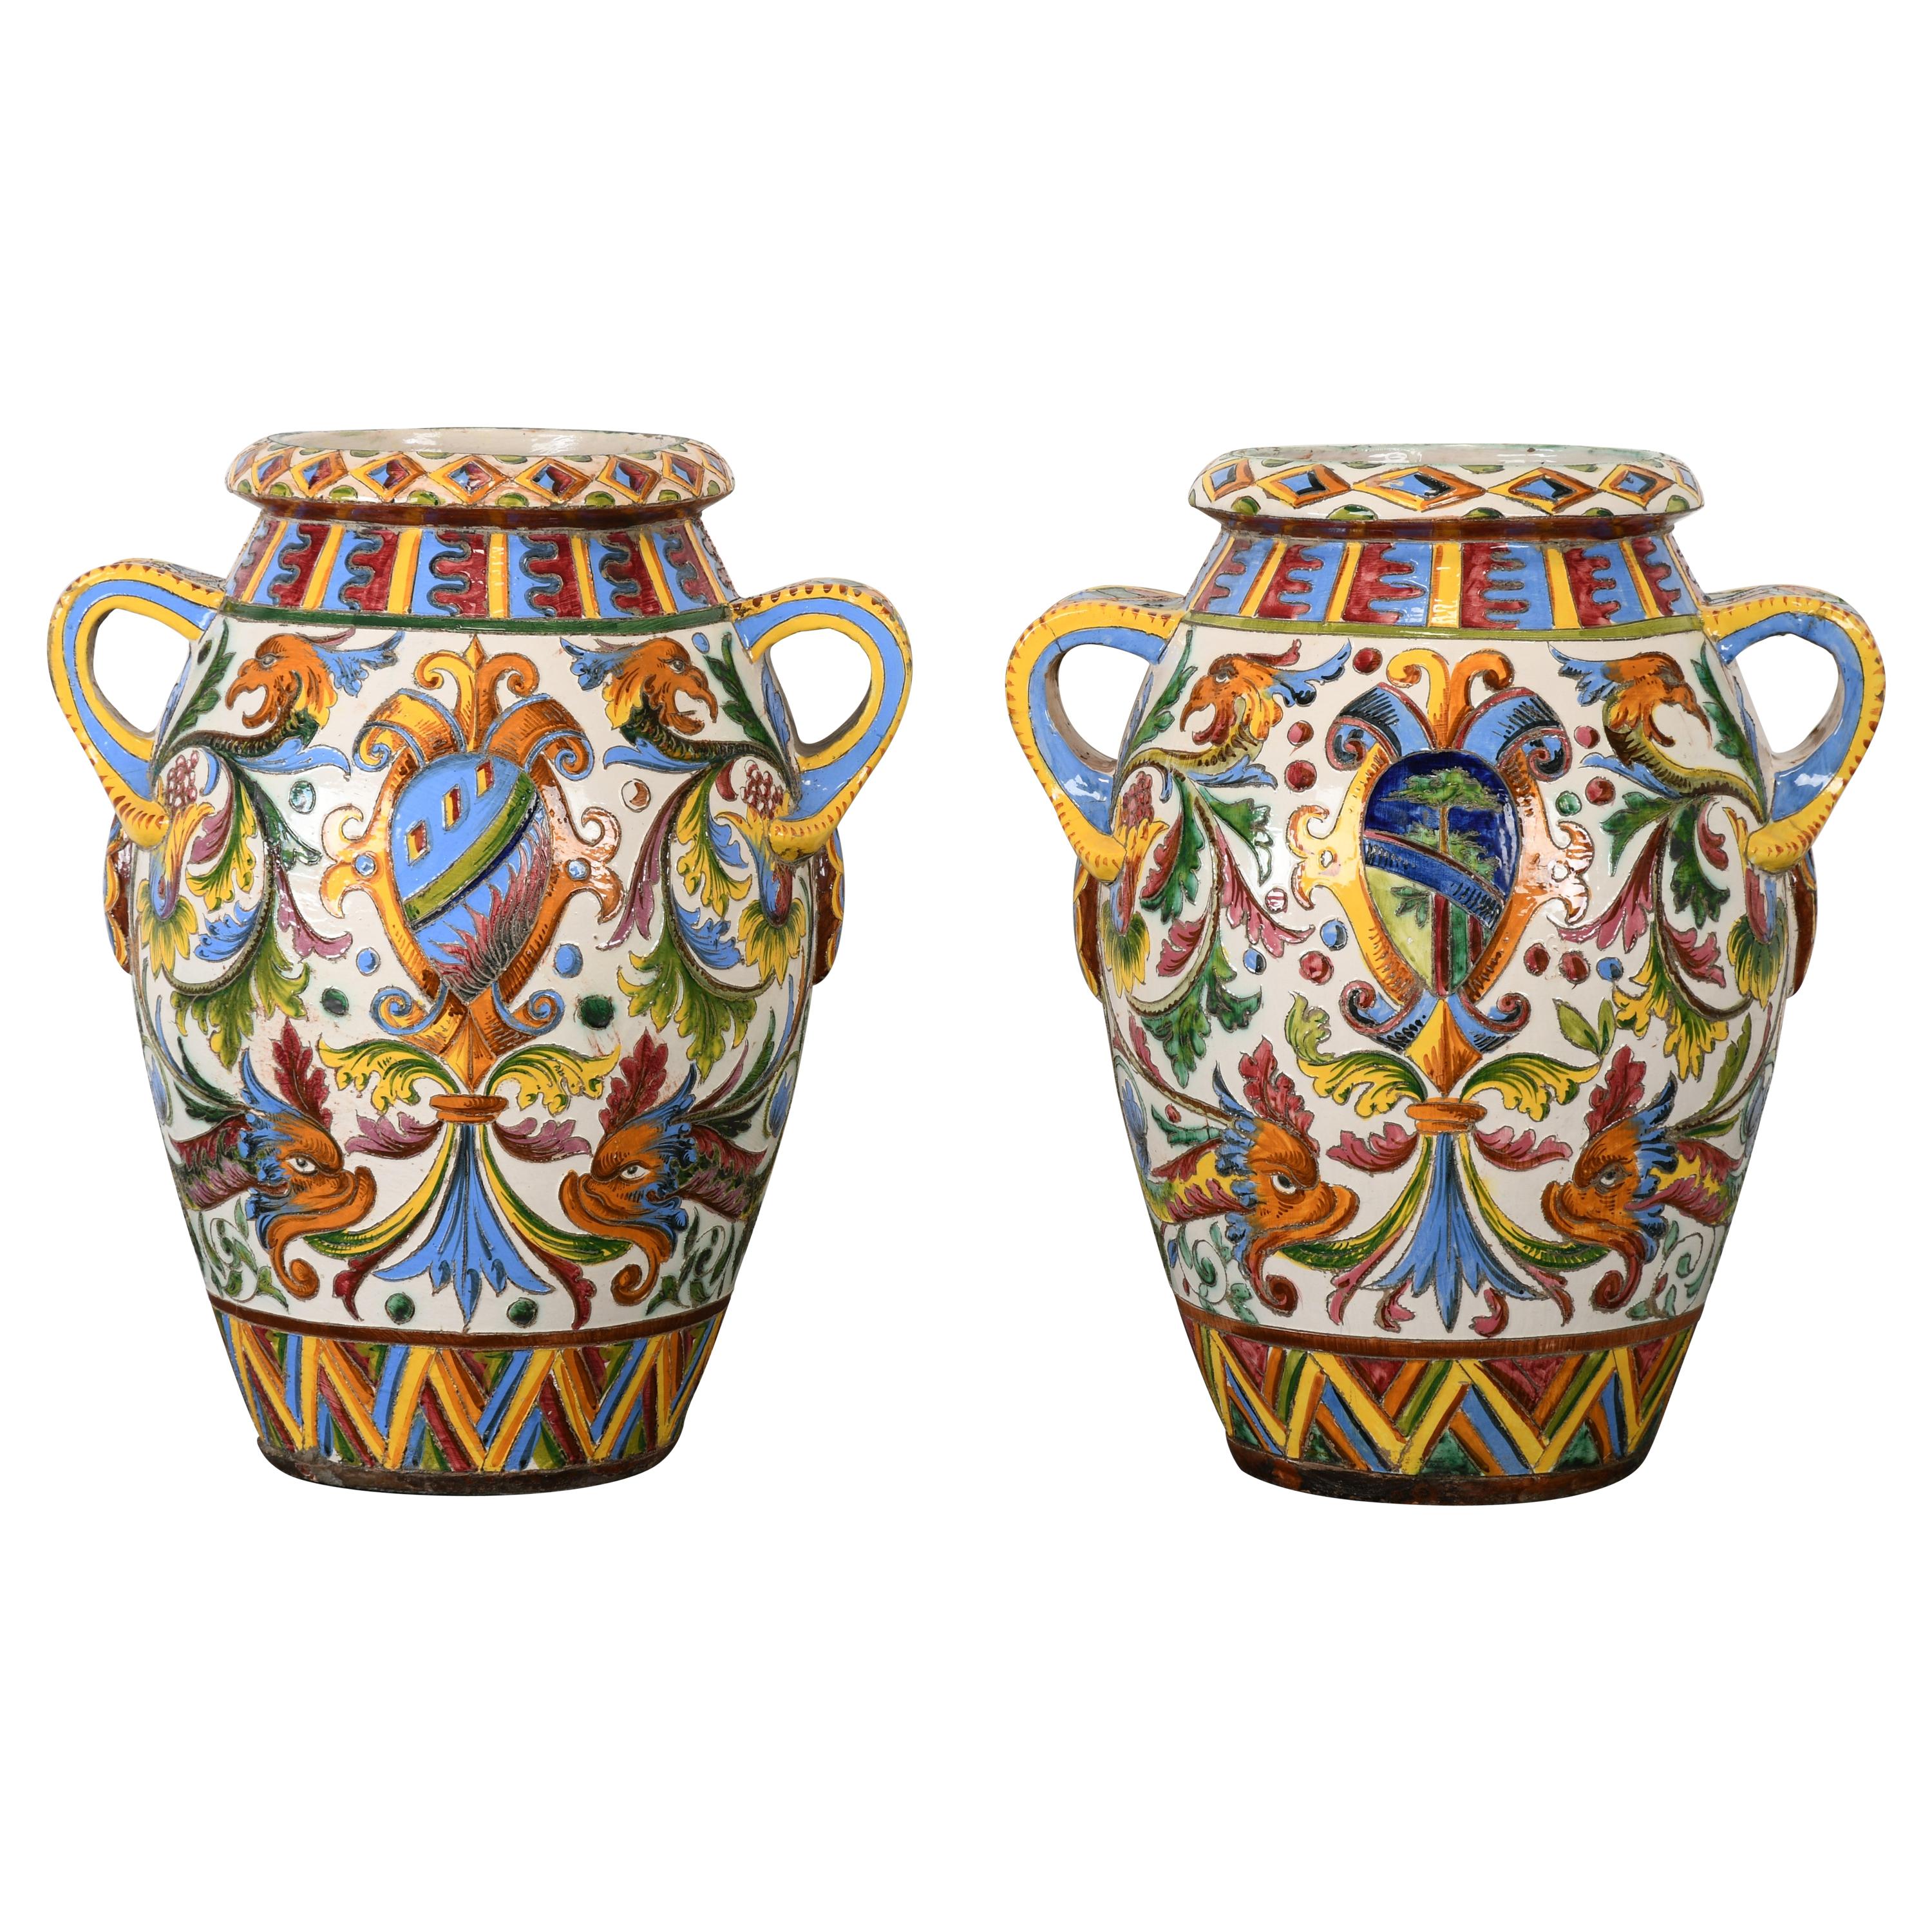 Pair of Large-Scale Italian Majolica Terracotta Urns, 20th Century